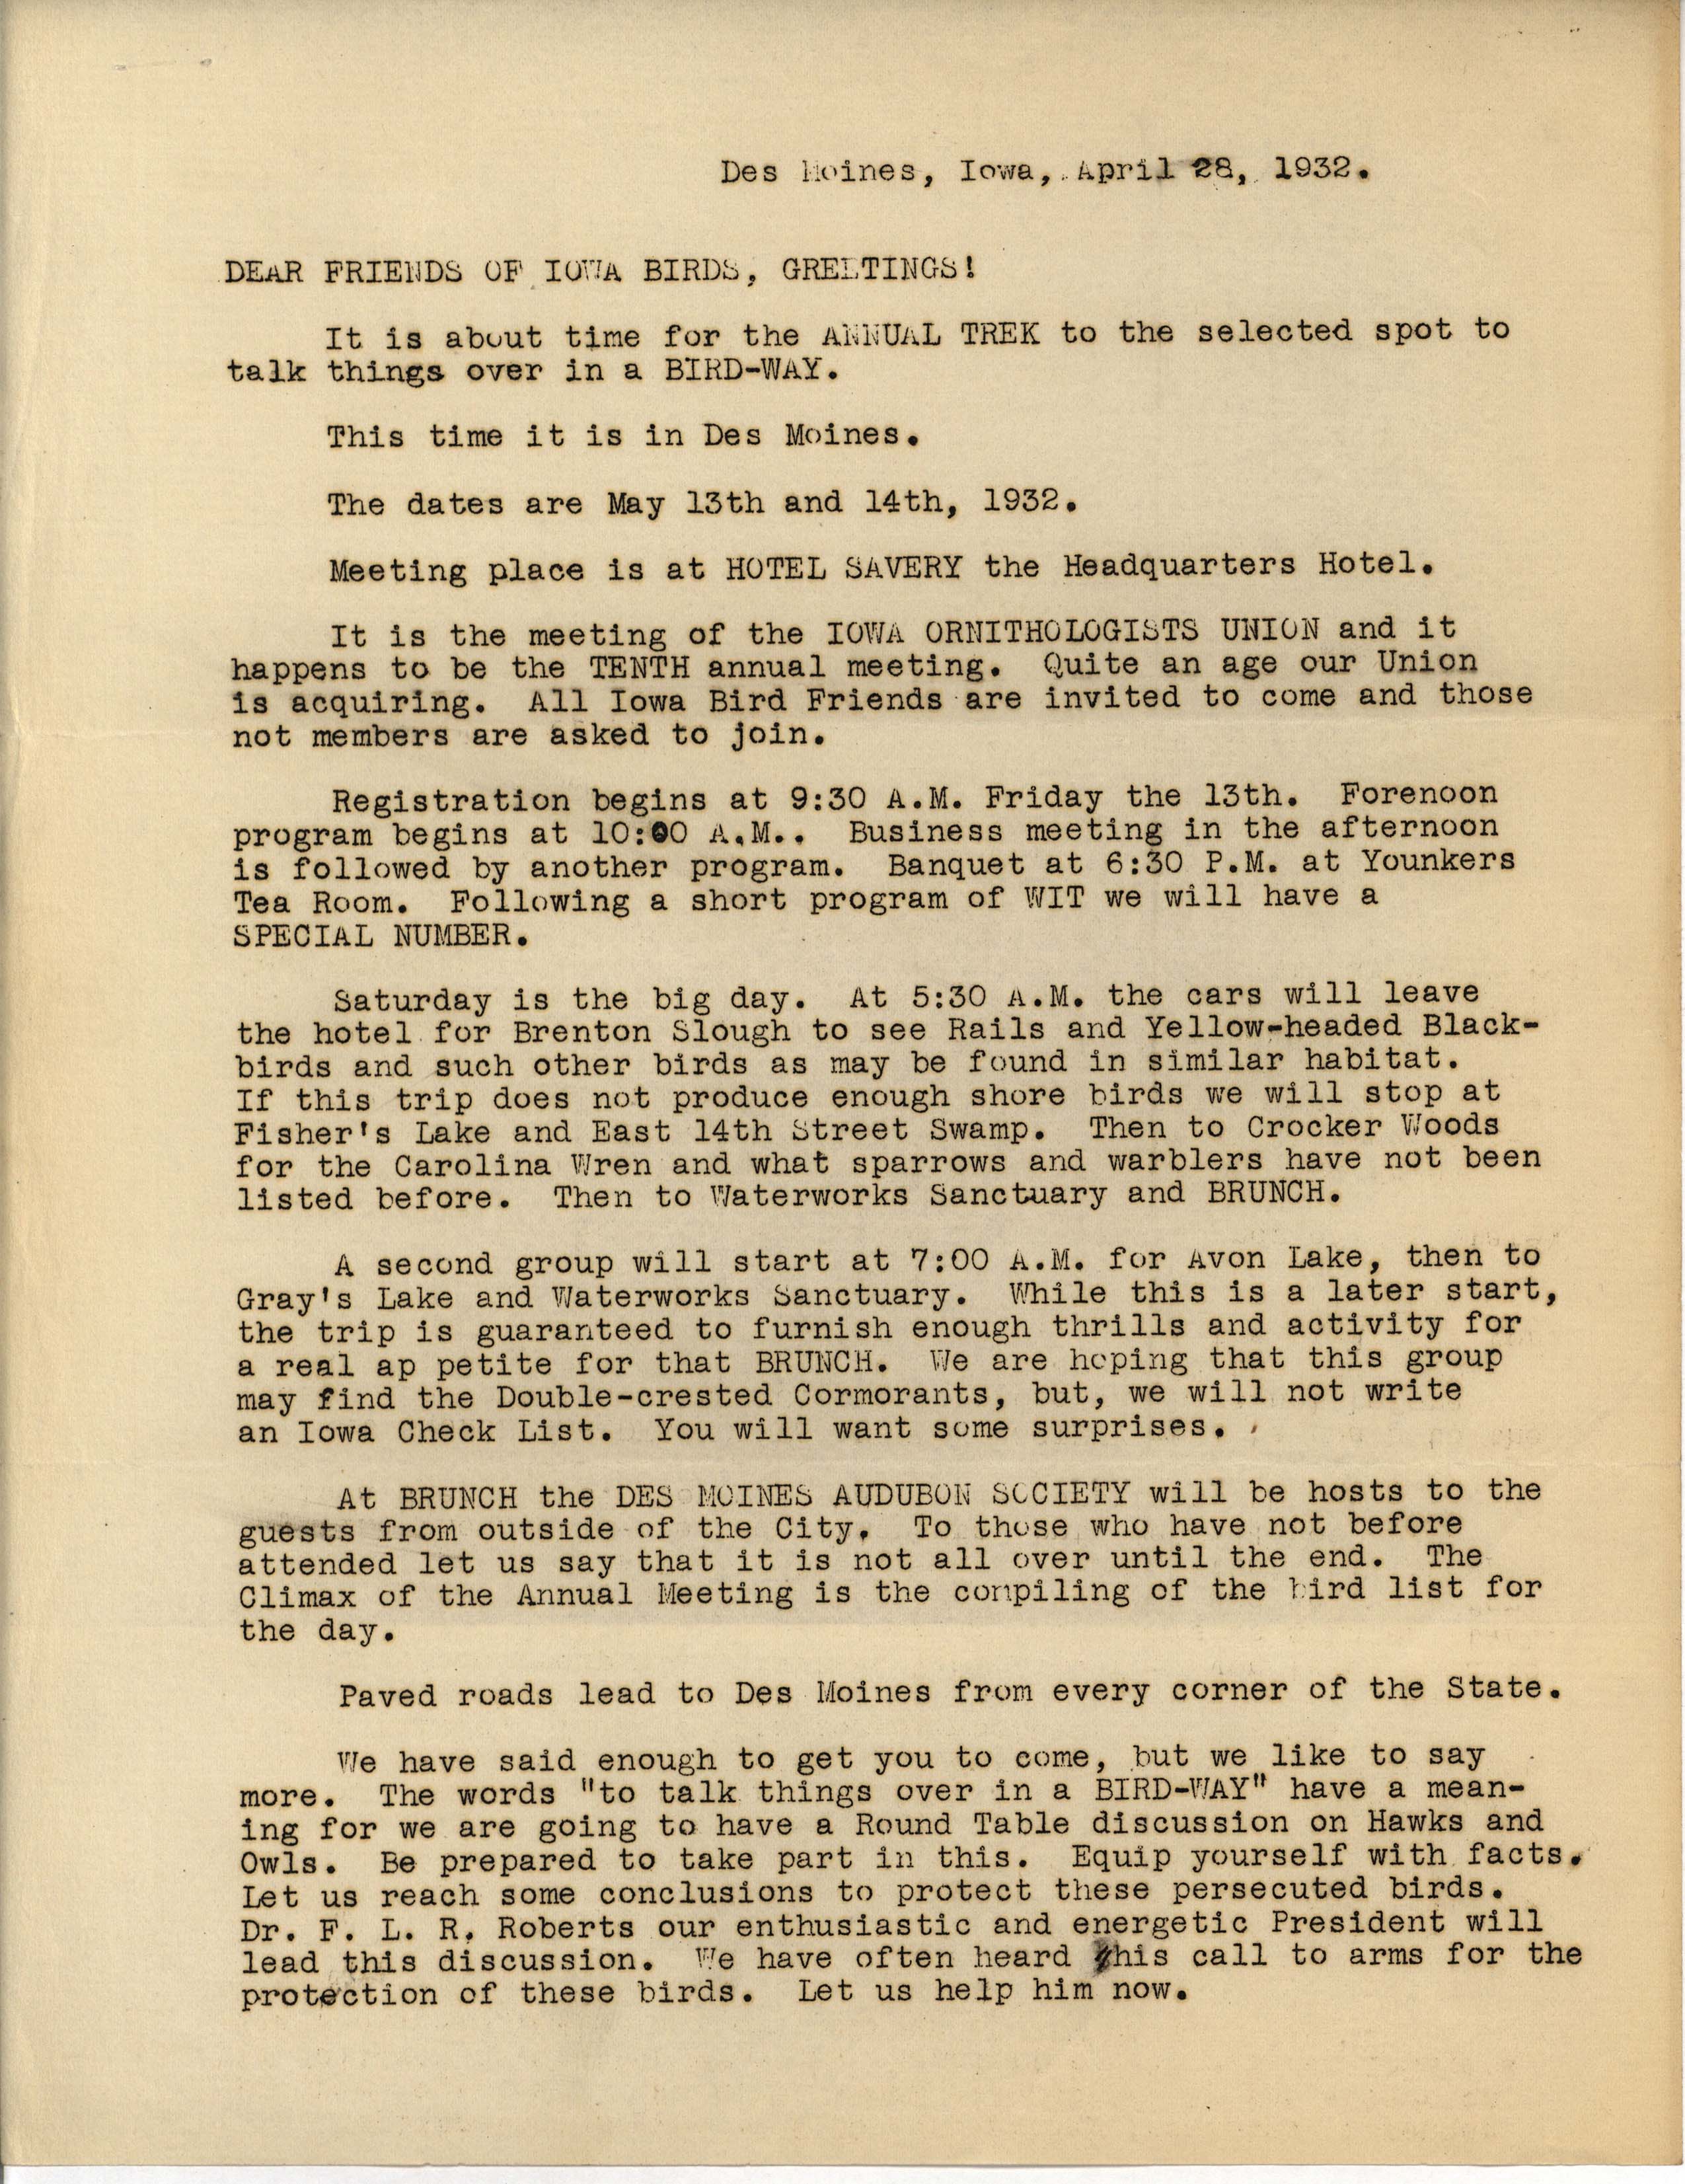 Des Moines Audubon Society letter to its members regarding Iowa Ornithologists' Union annual meeting, April 28, 1932